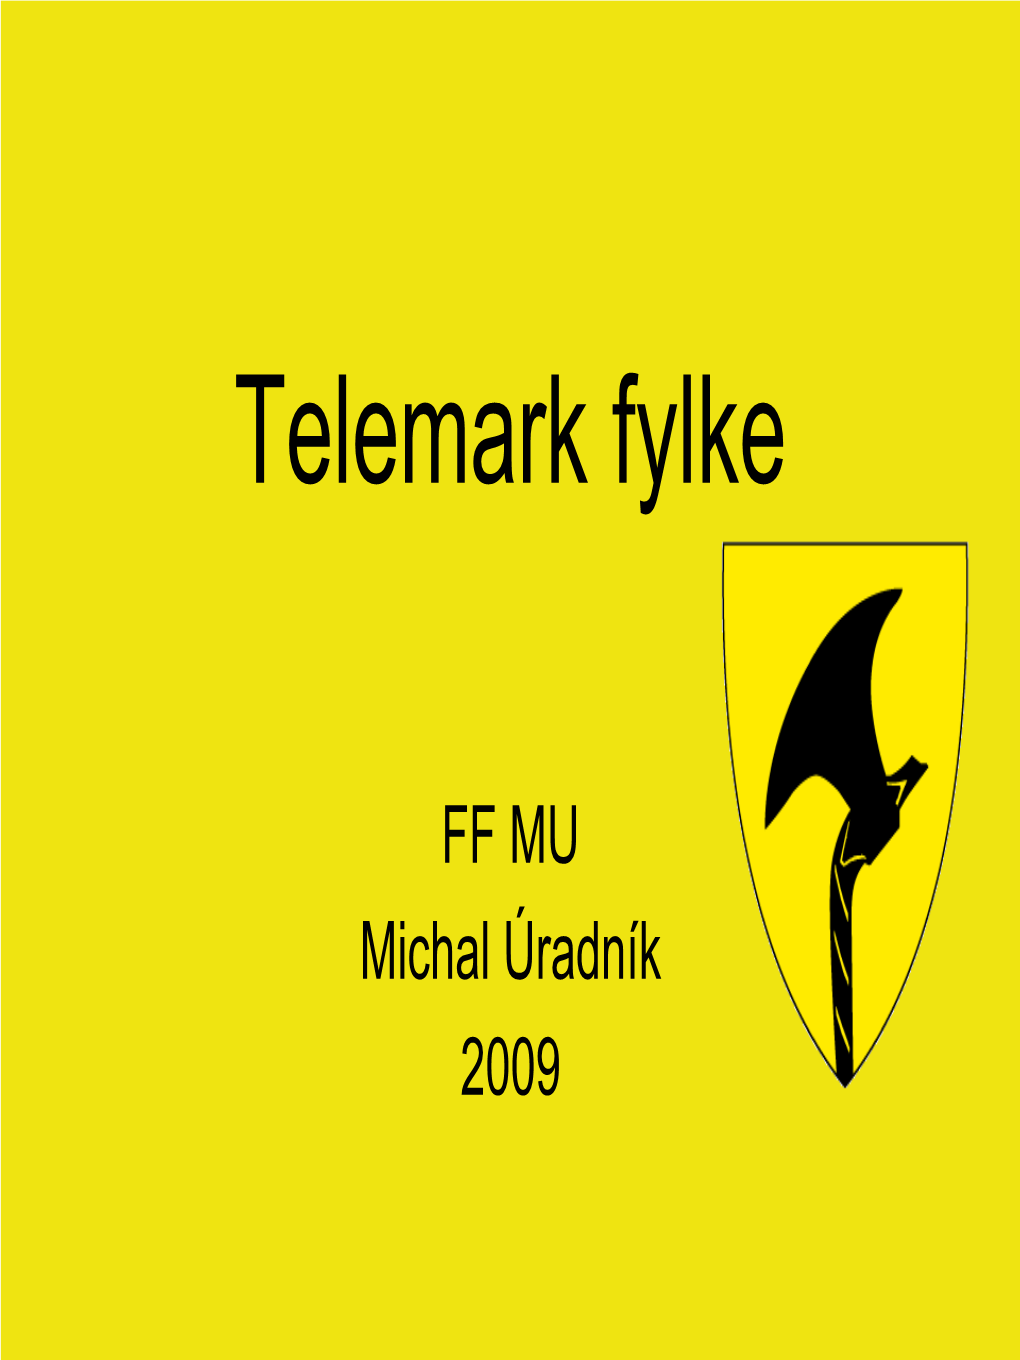 Telemark Fylke